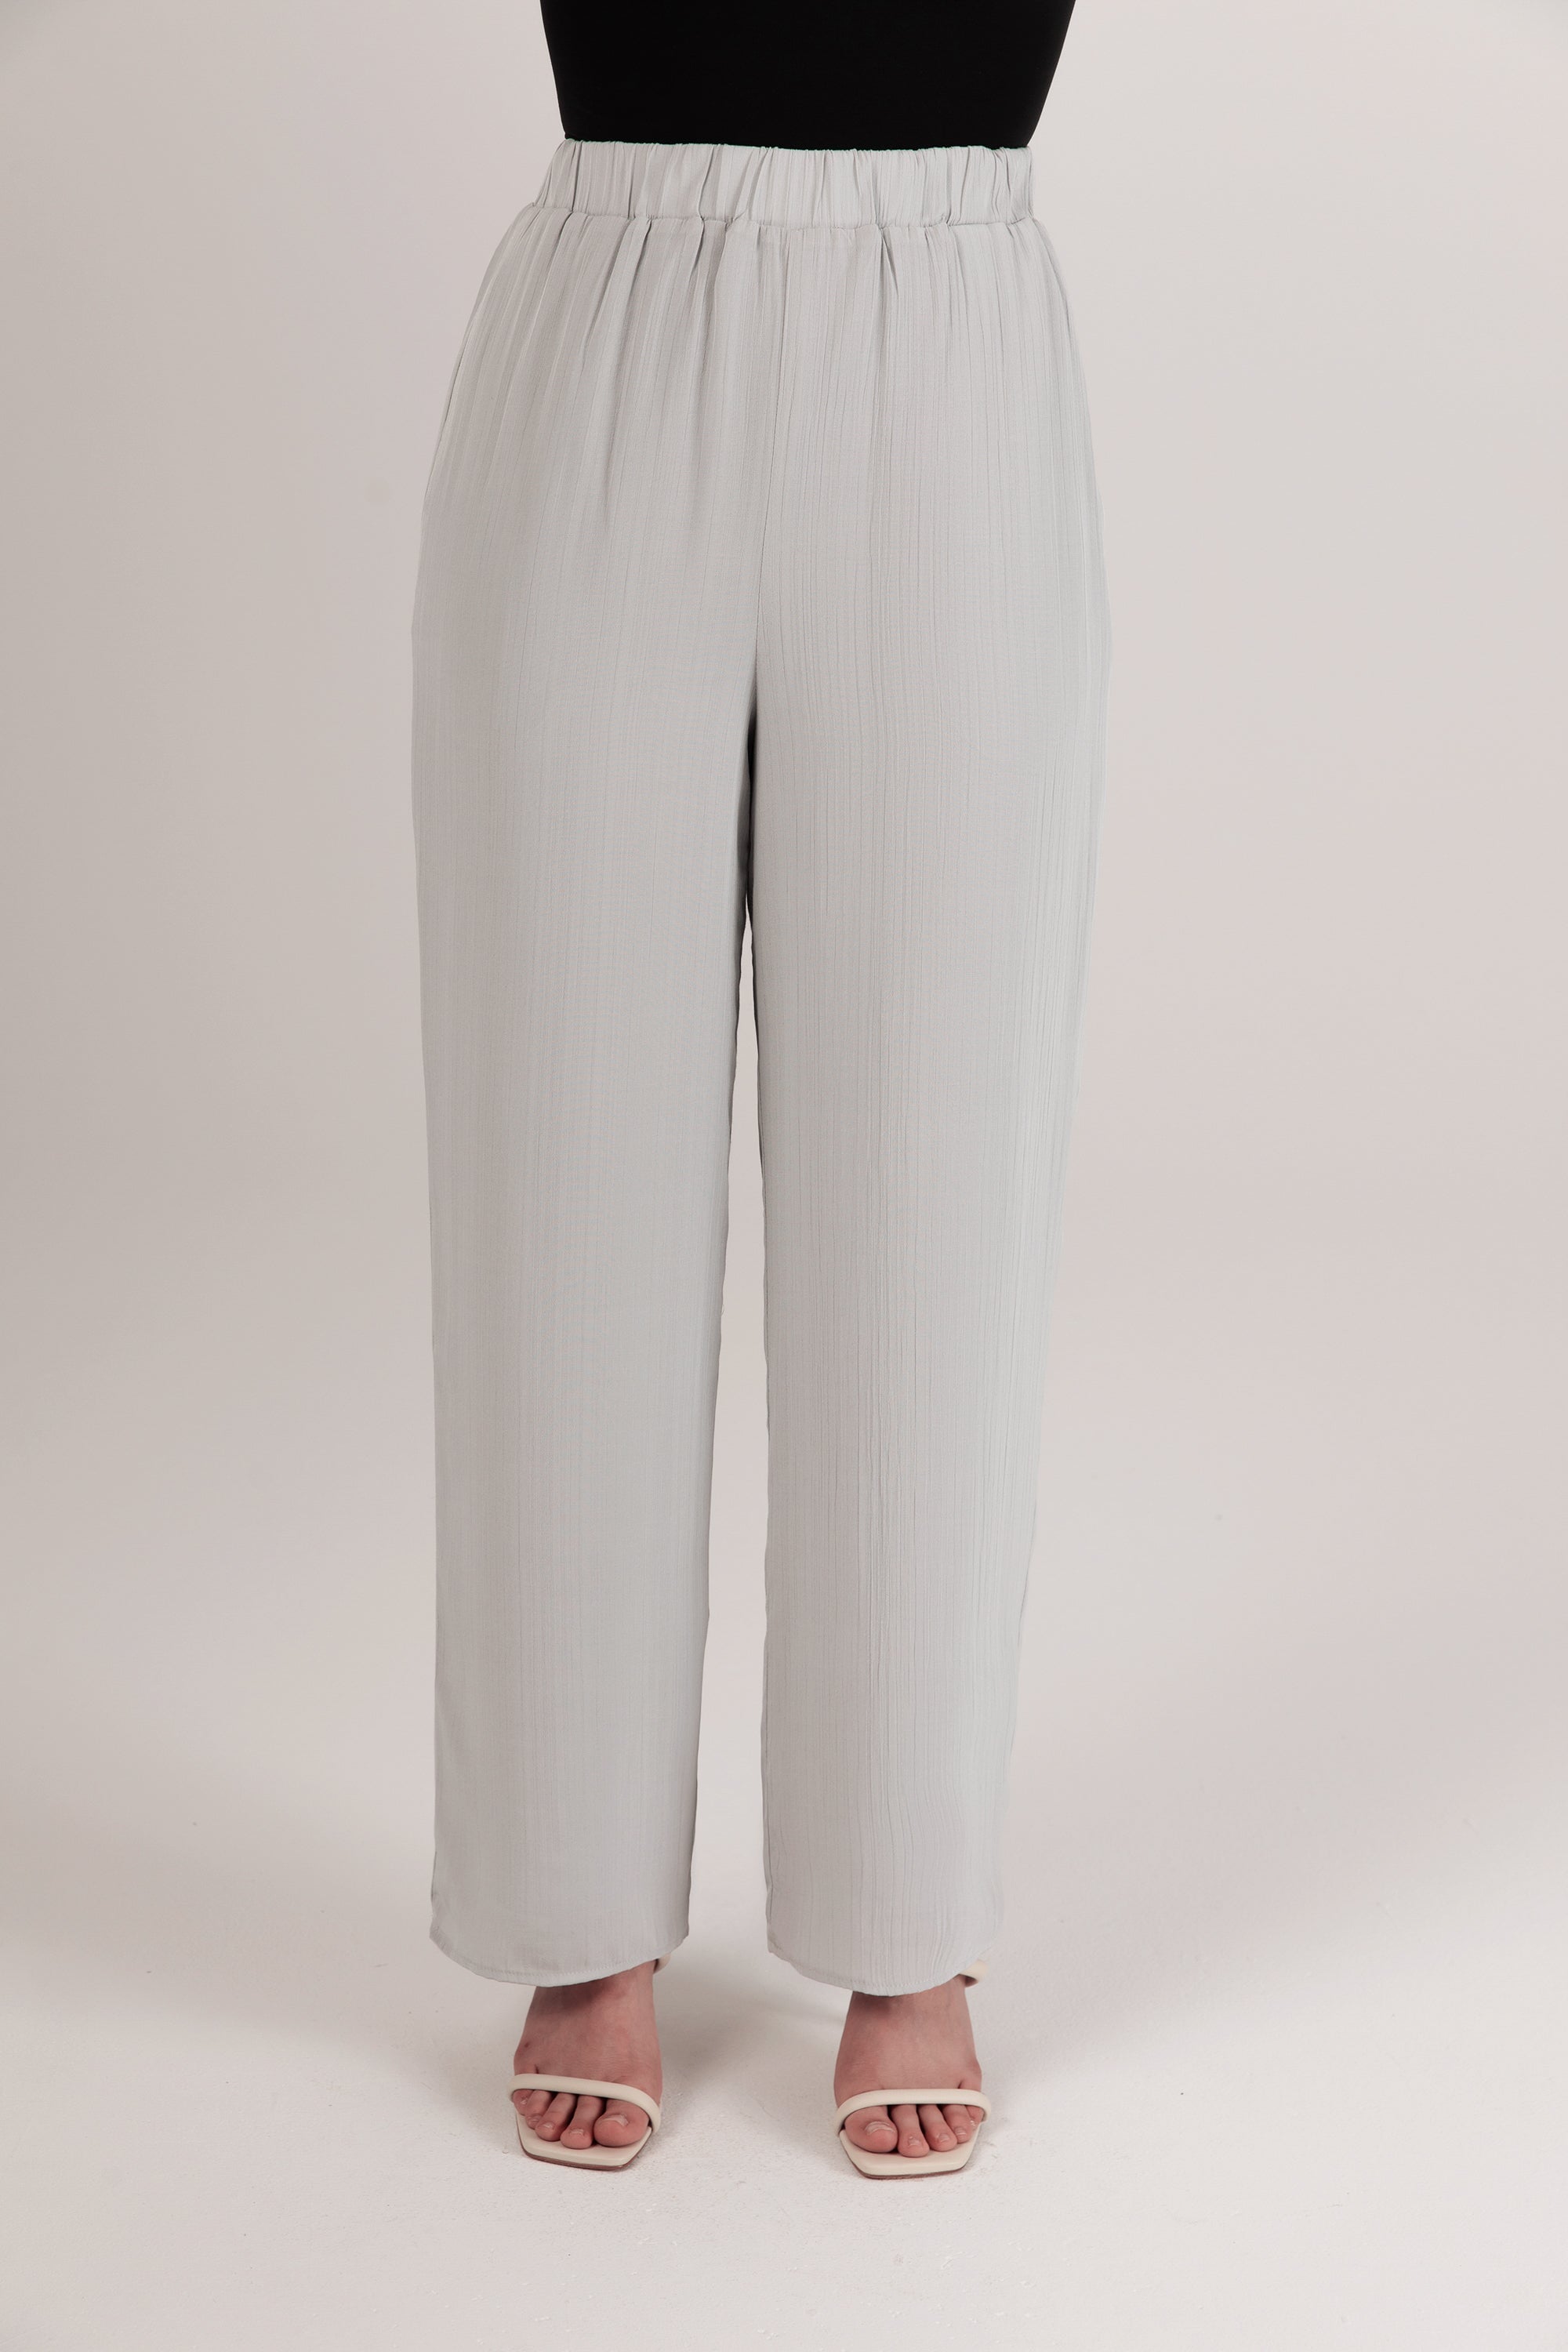 Nashwa Textured Rayon Wide Leg Pants - Soft Grey epschoolboard 